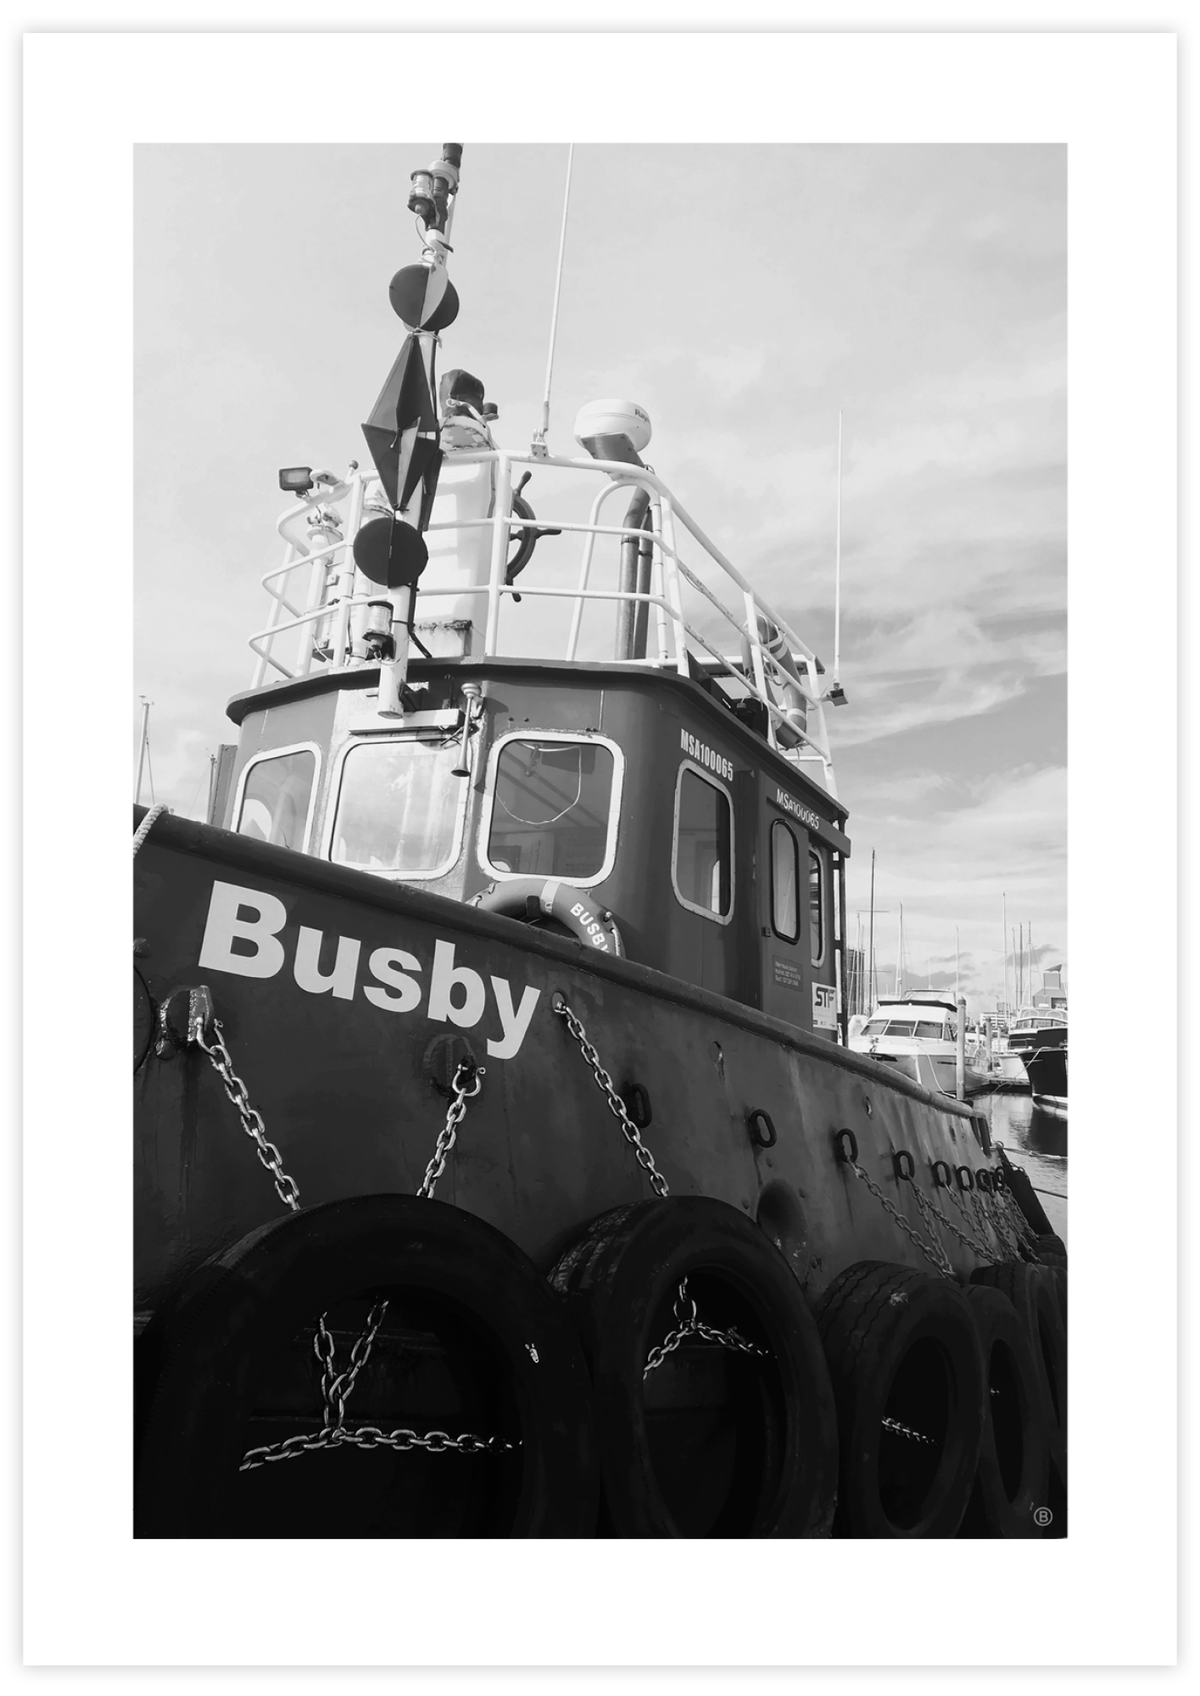 Busby Boat